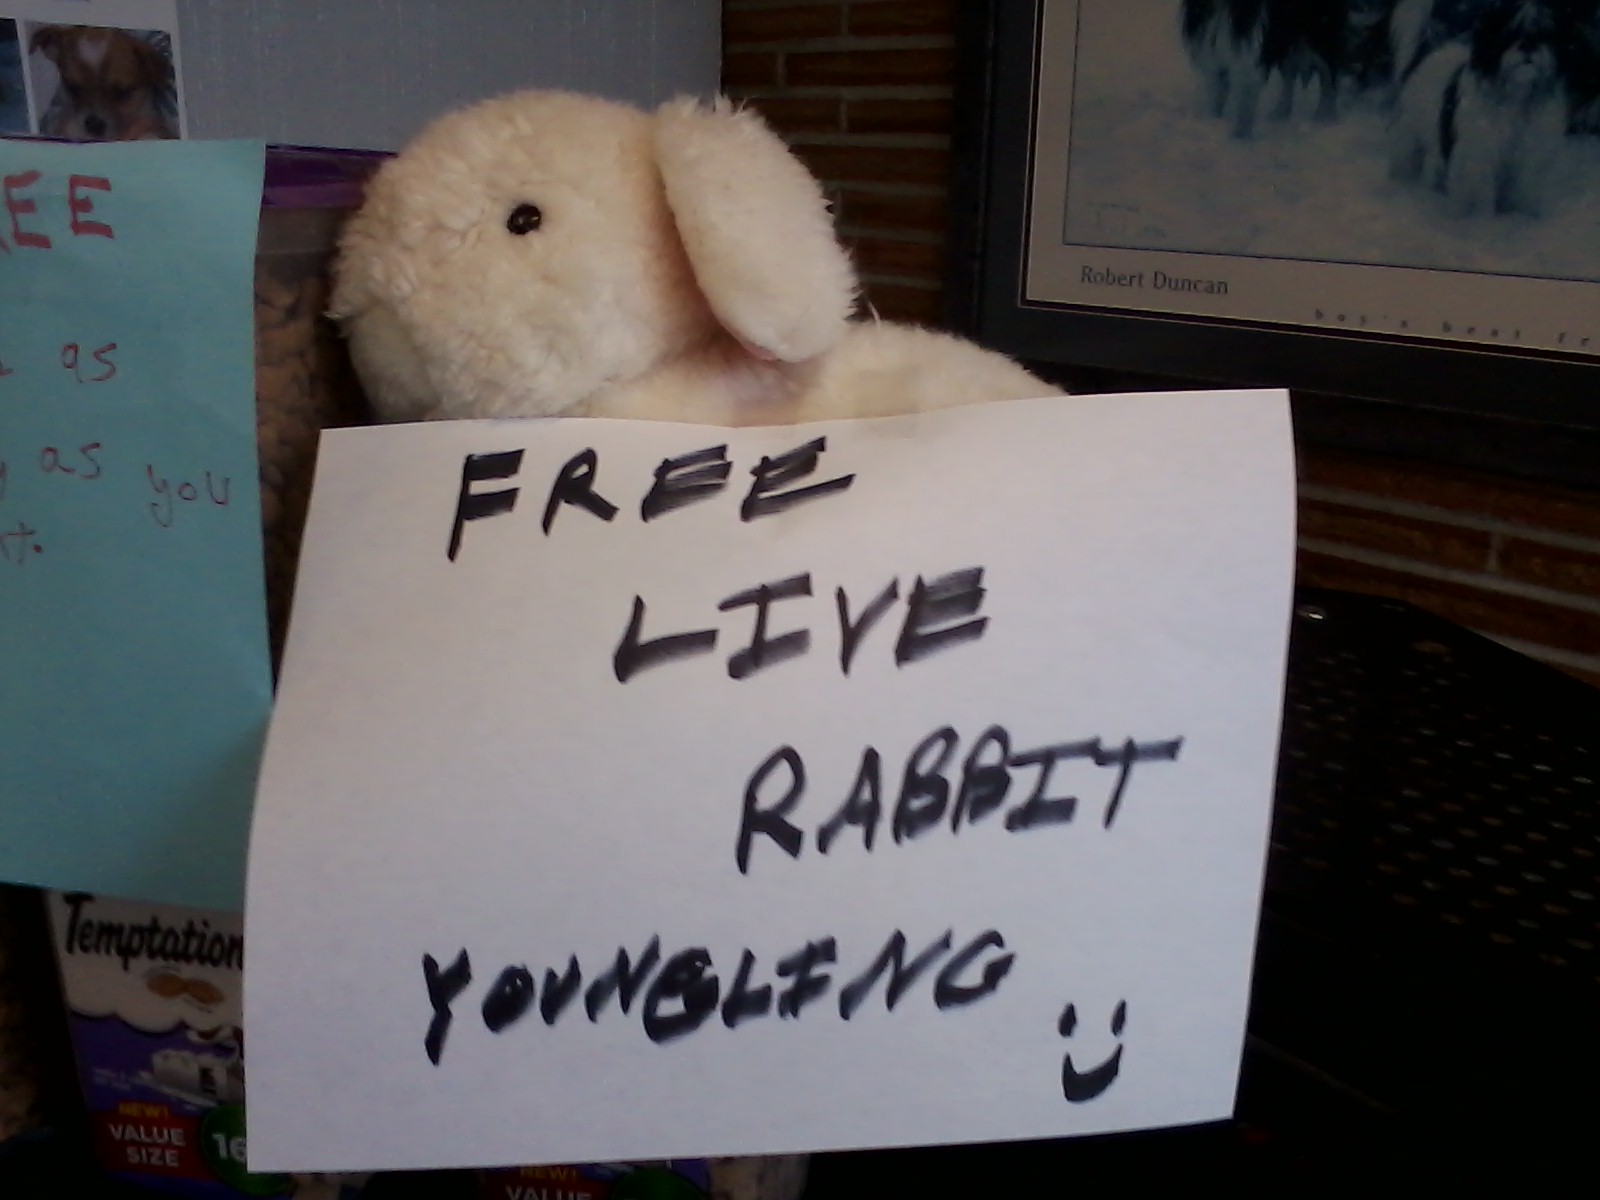 i put this rabbit up for adoption